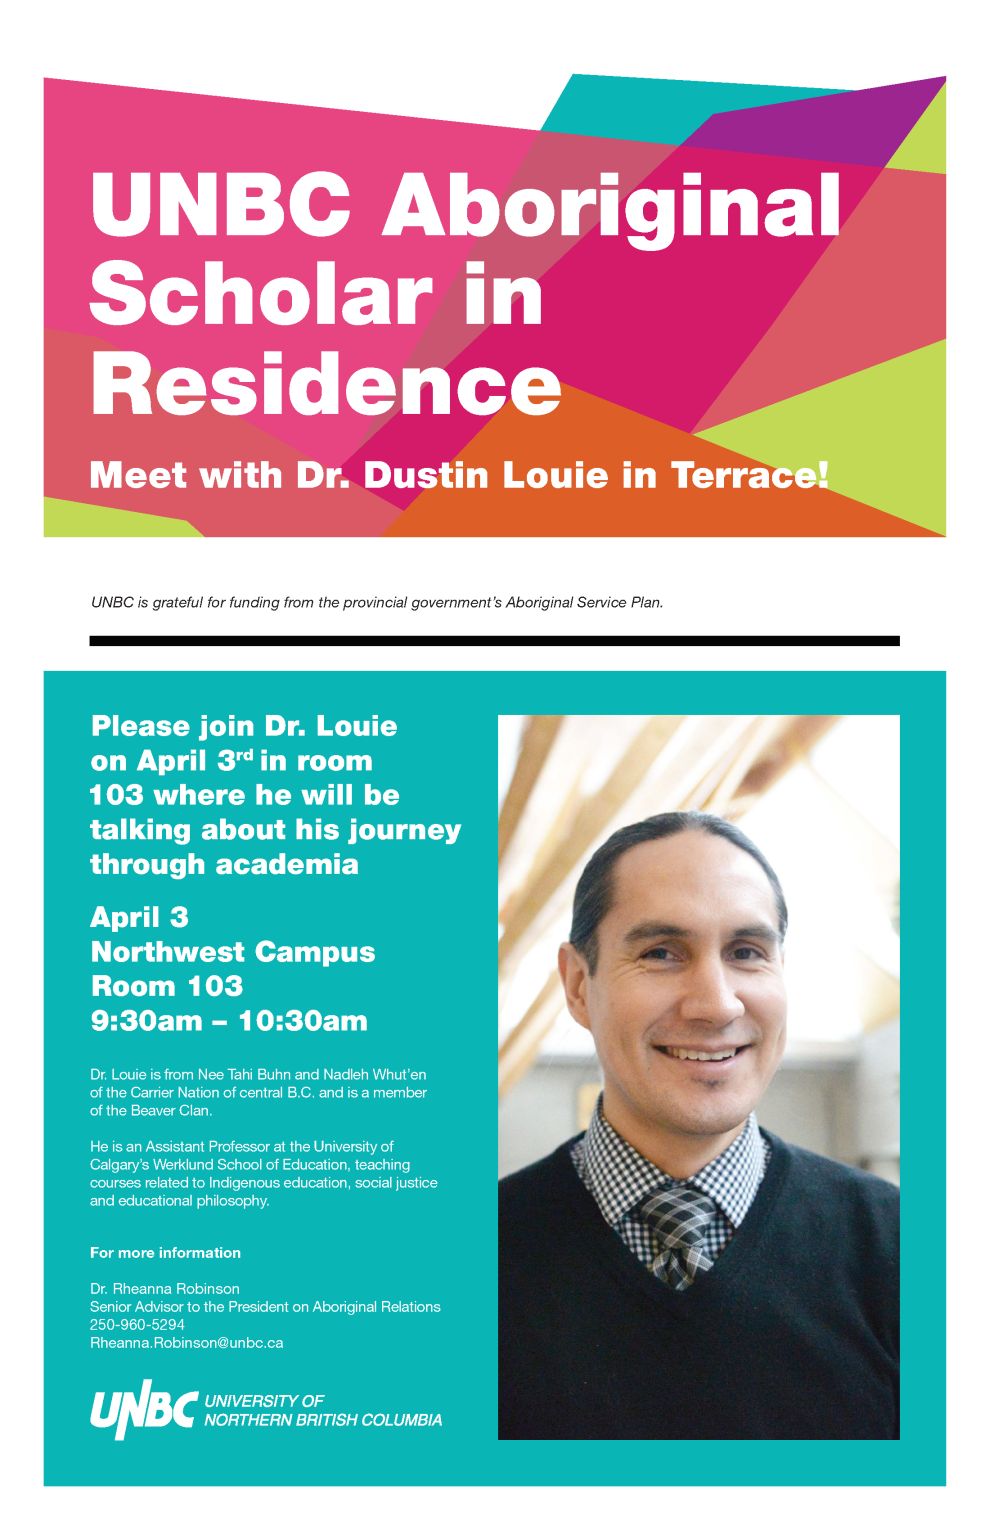 UNBC Aboriginal Scholar in Residence - Dr. Dustin Louie